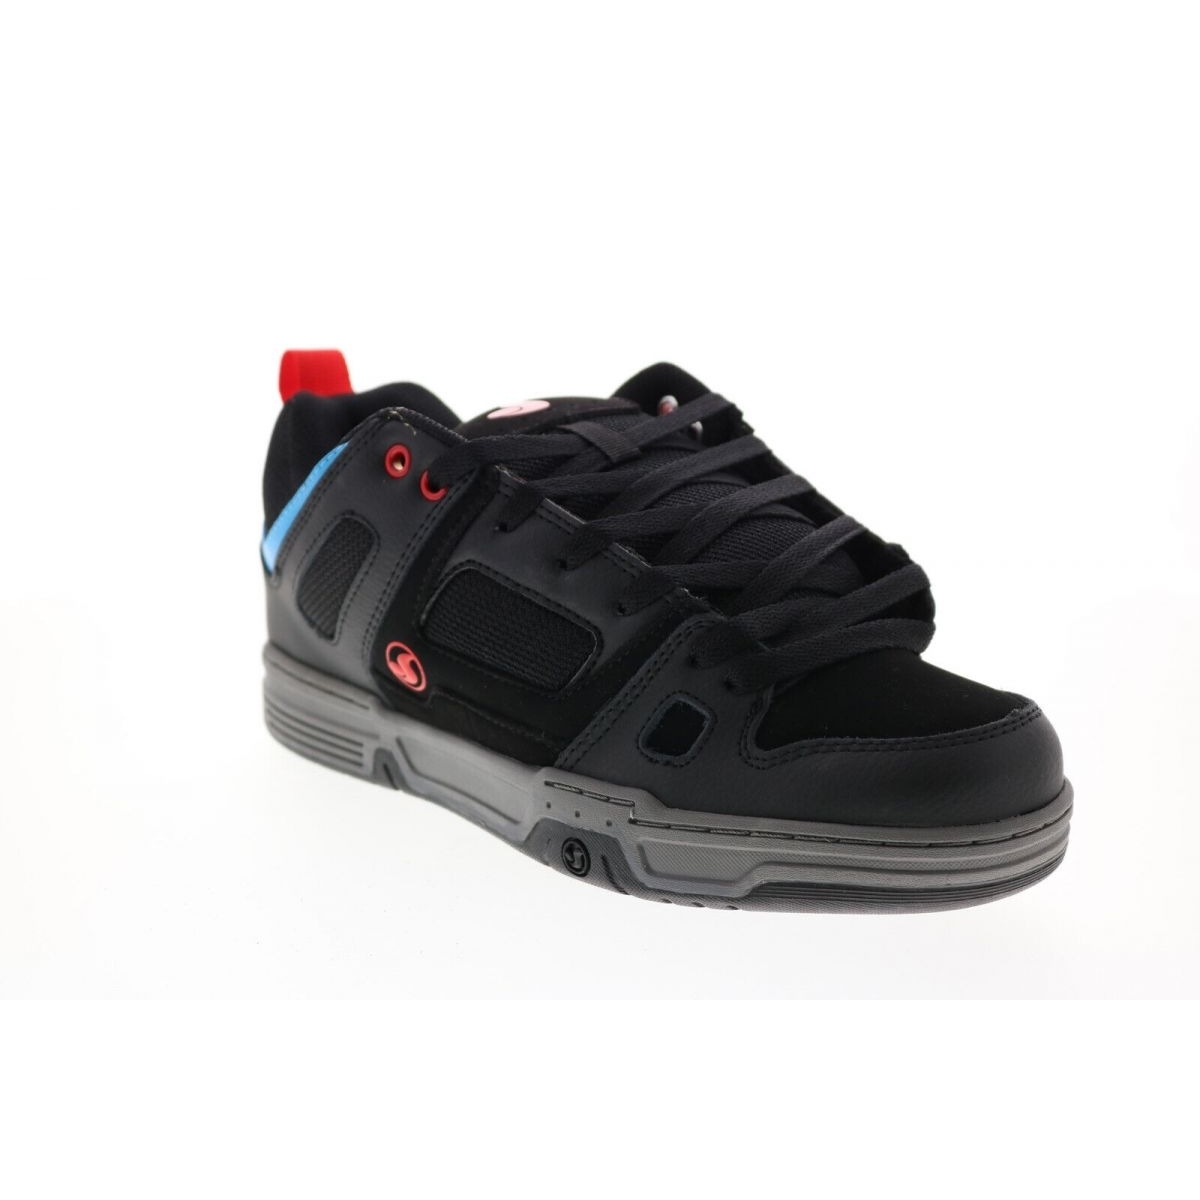 DVS Men's Gambol Skate Shoe 0 BLACK FIERY RED BLUE NUBUCK - BLACK FIERY RED BLUE NUBUCK, 10